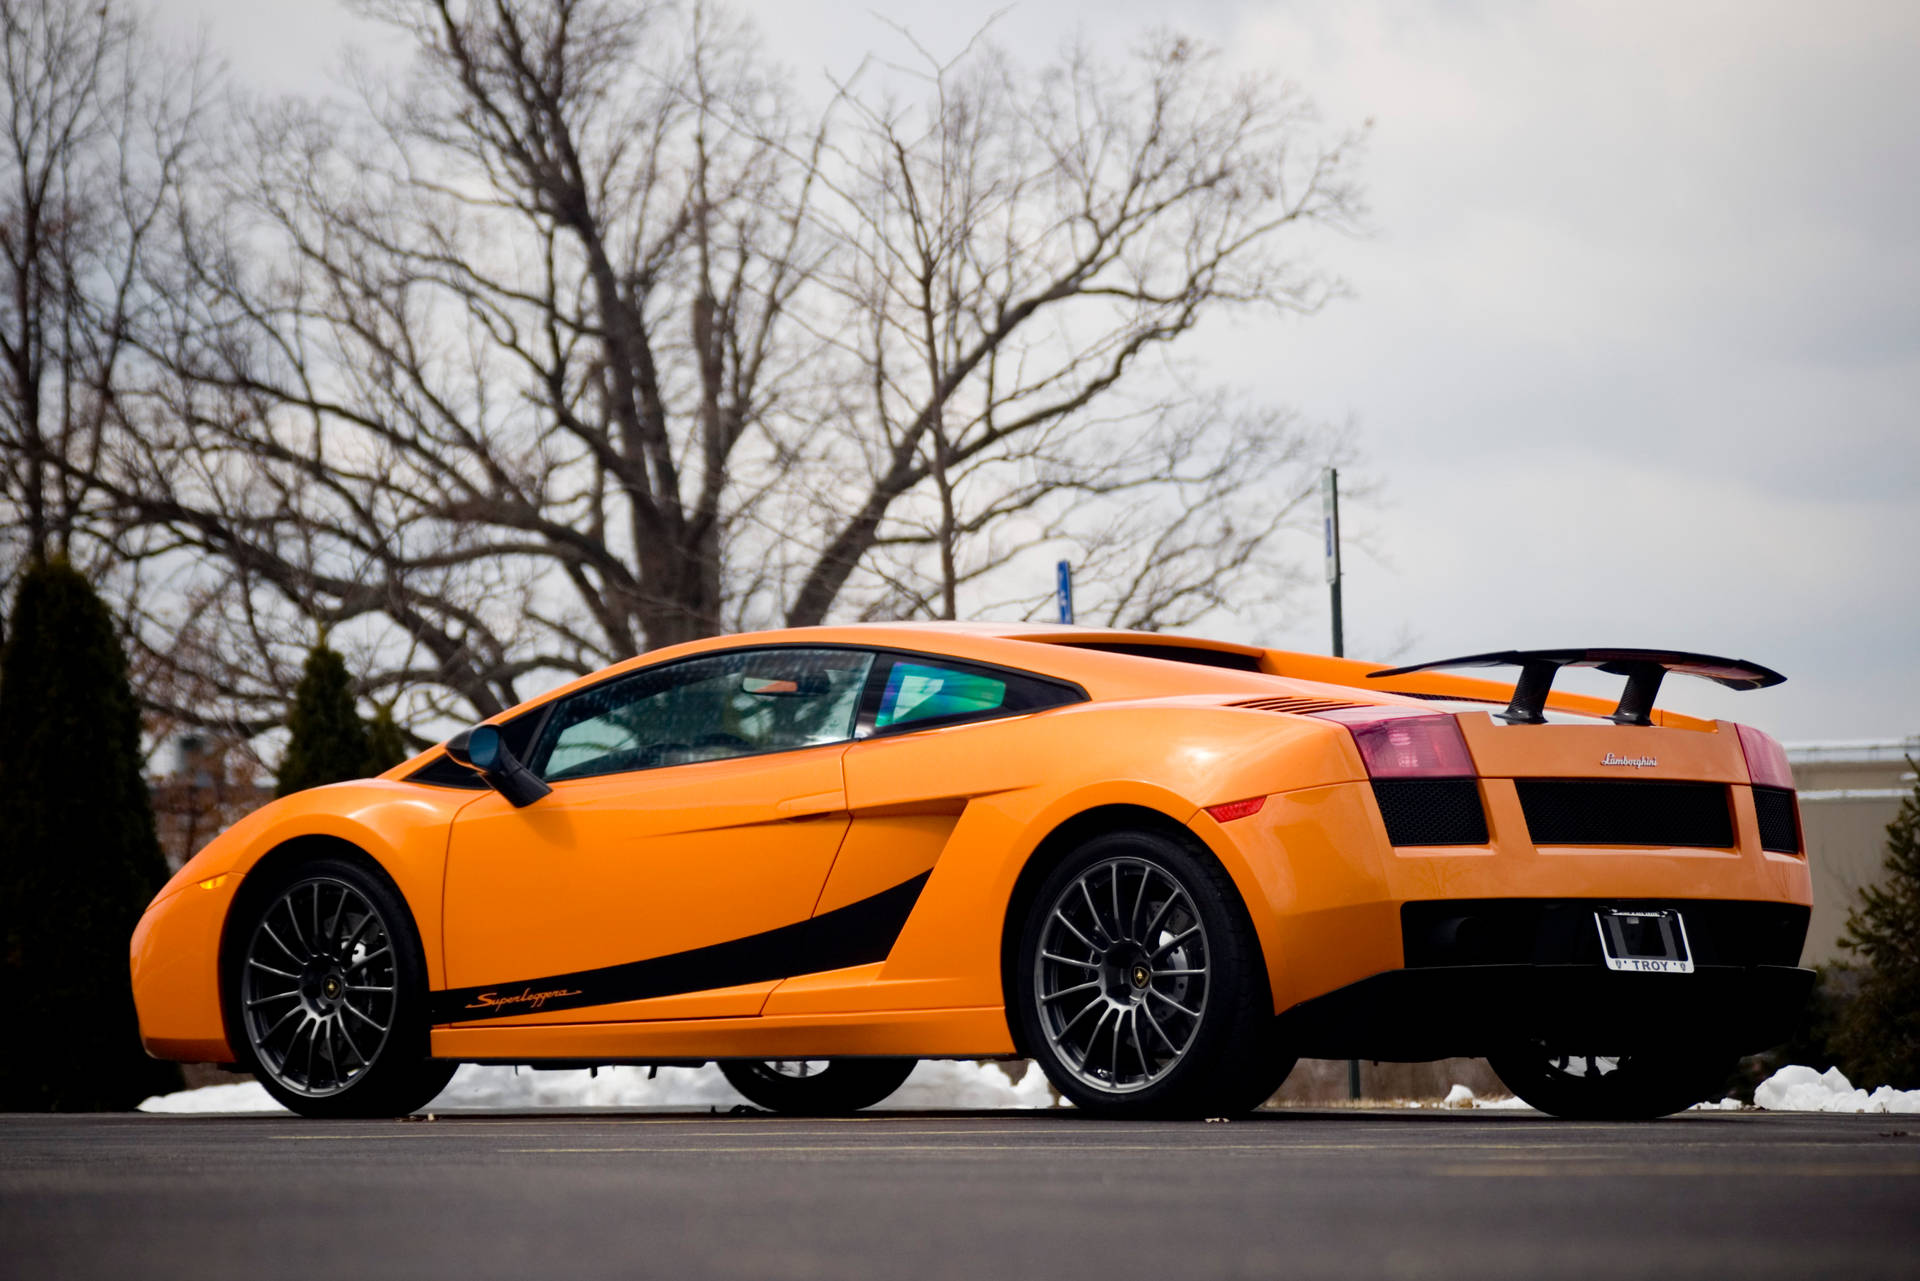 4k Lamborghini Gallardo In Orange Paint Wallpaper